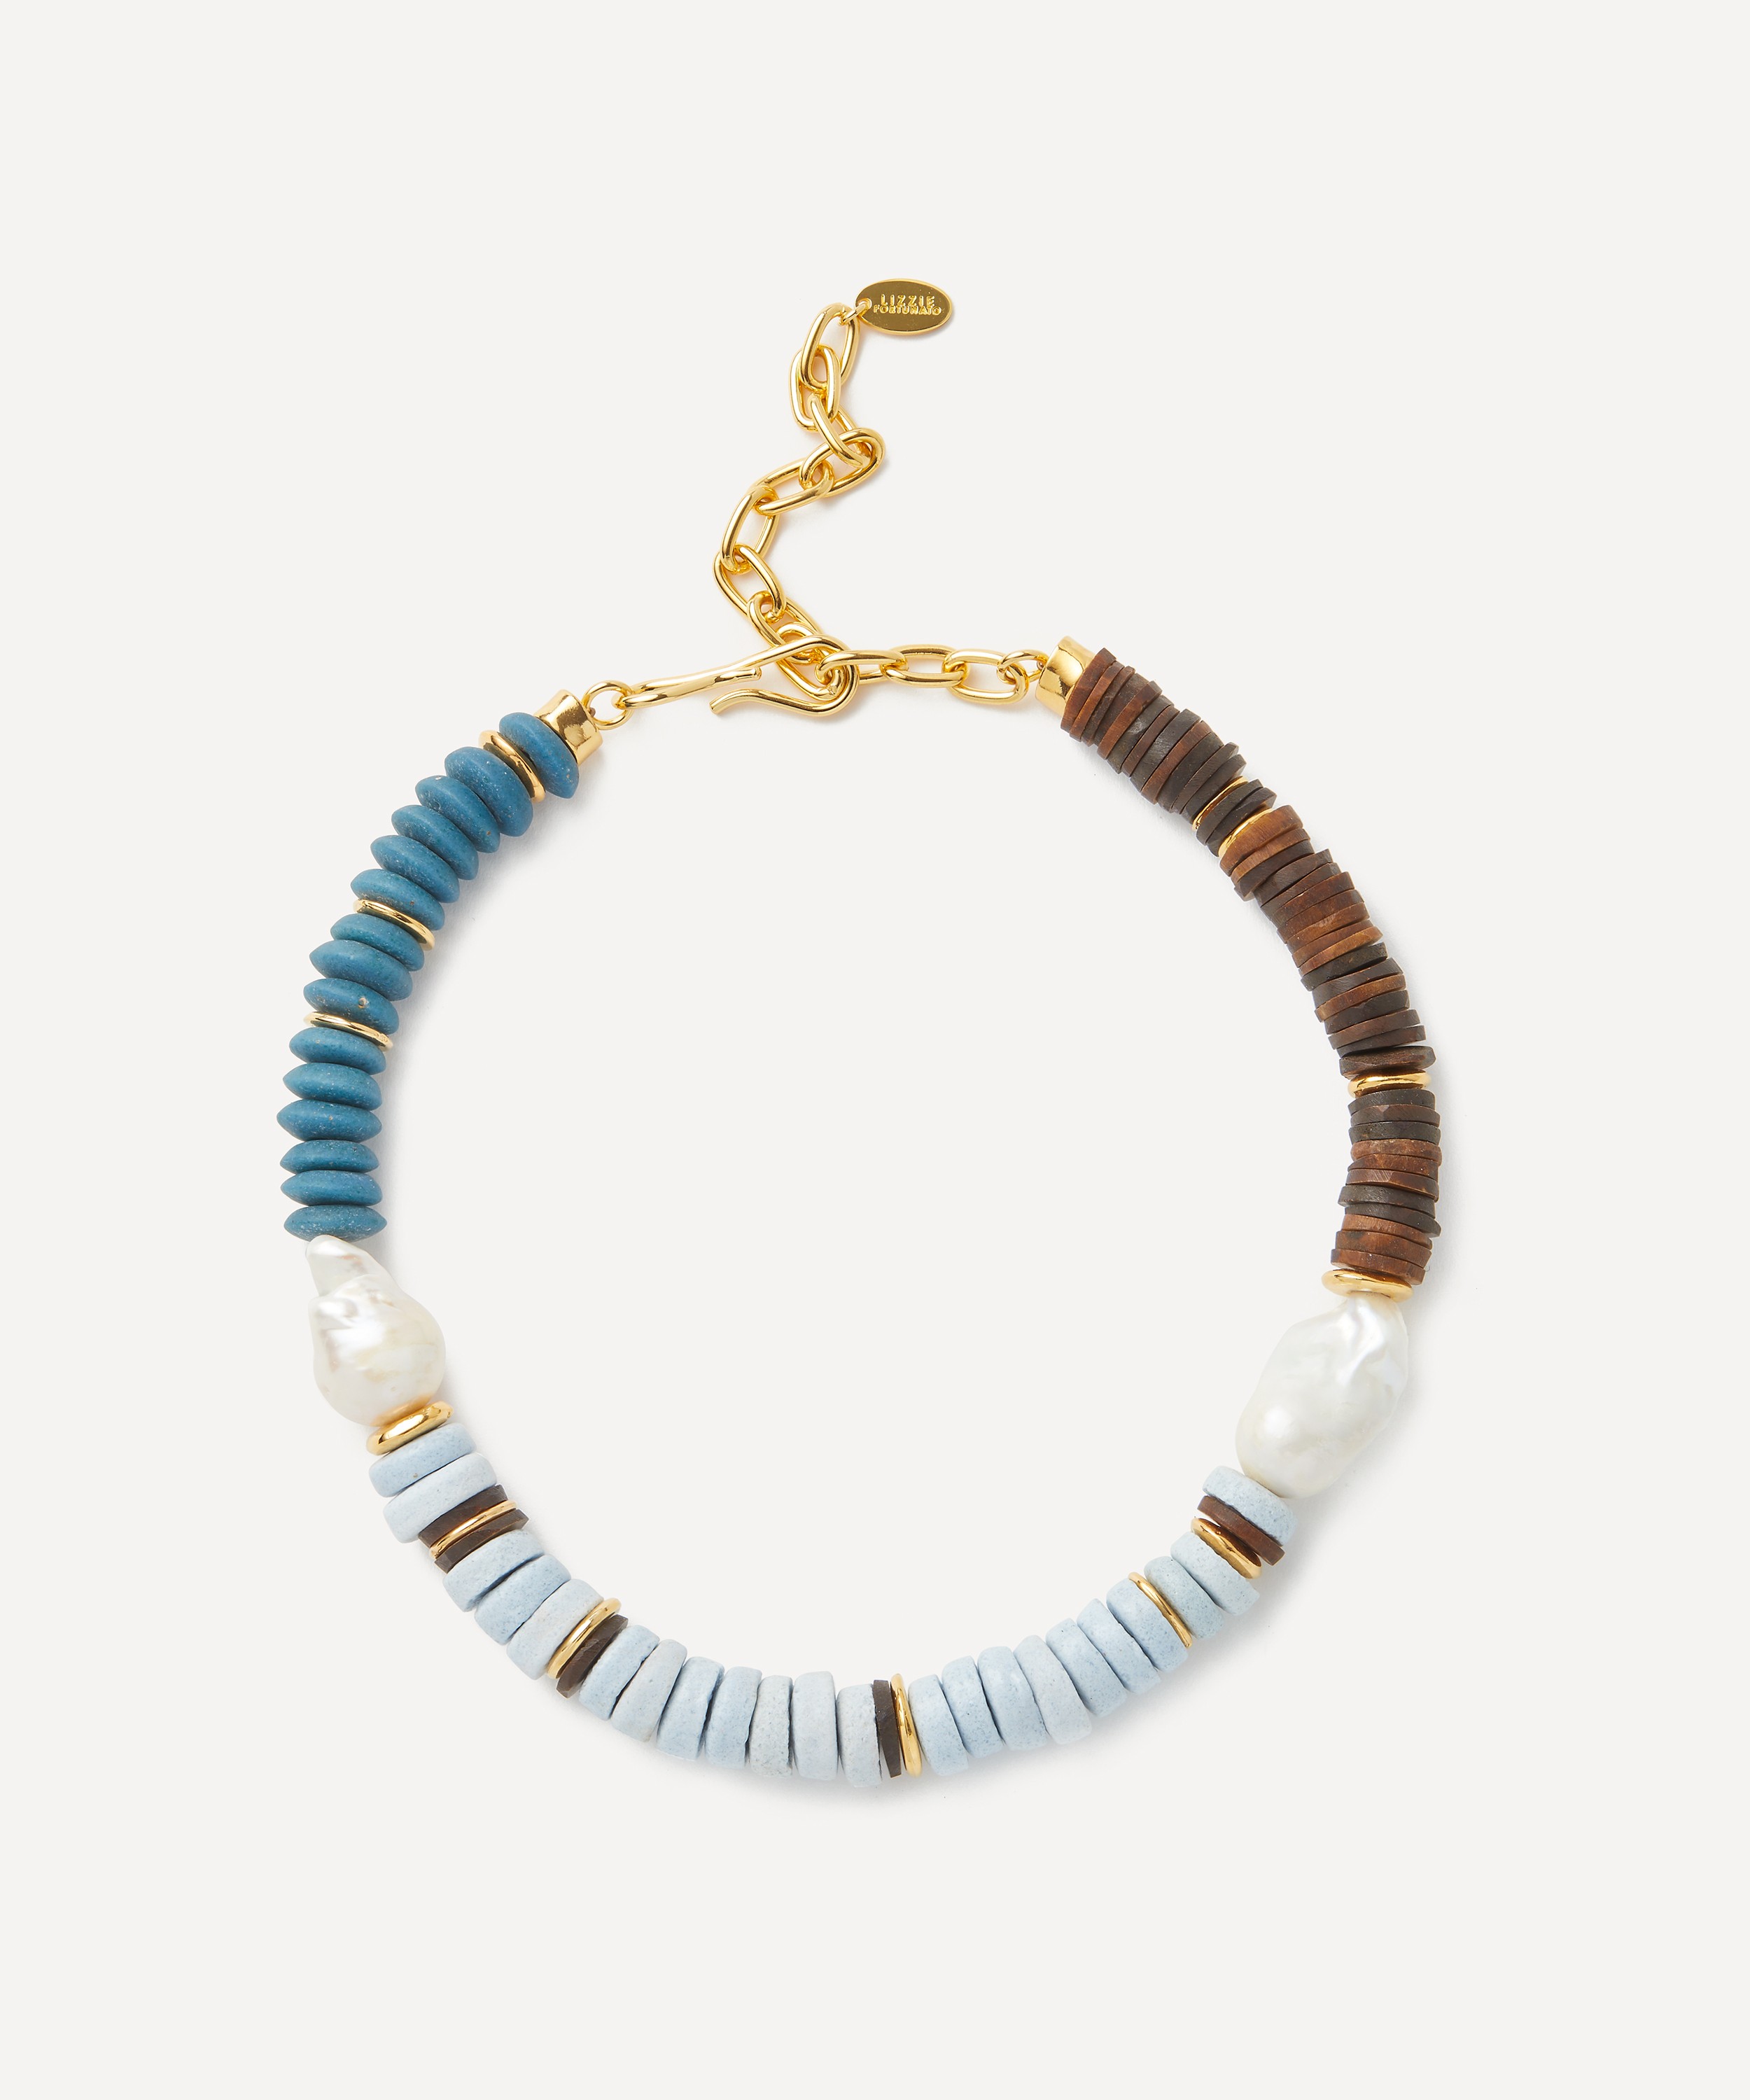 Rose Gold Textured Link Chain Extender 2' | Women's Designer Jewelry by Monica Vinader